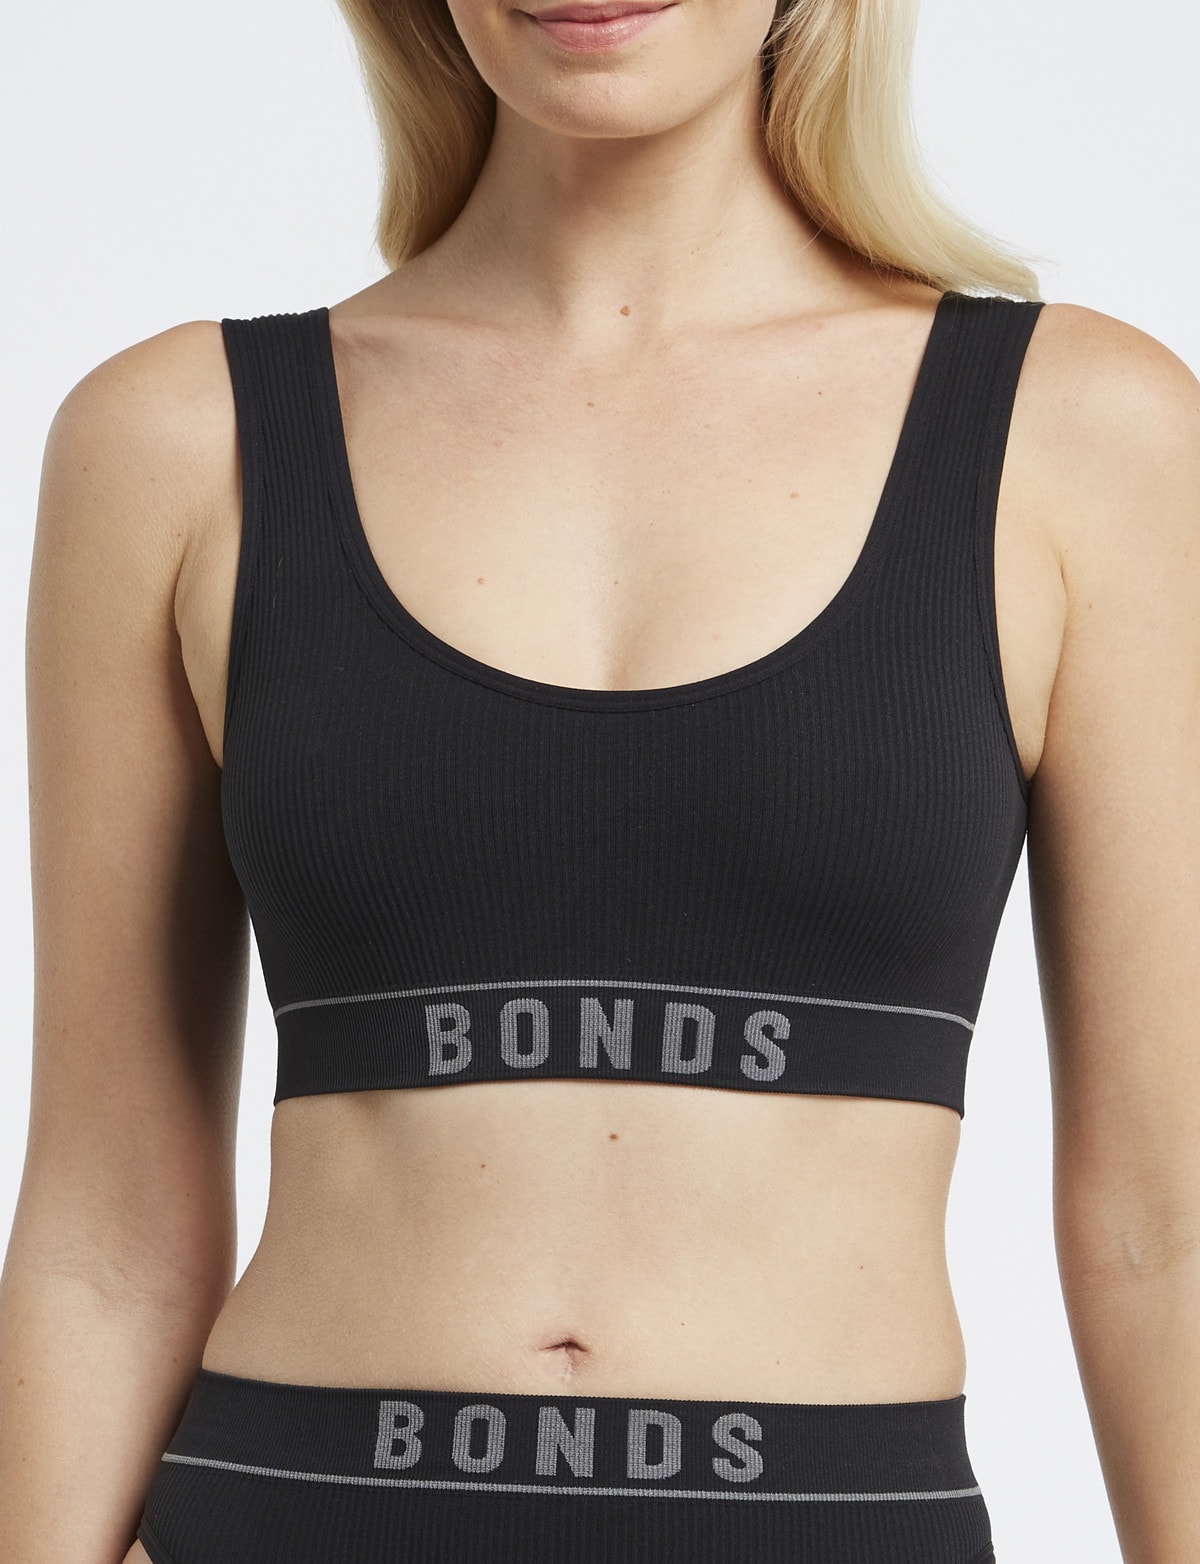 Bonds Retro Rib Scoop Crop  Genevieve's Wardrobe Bras Australia